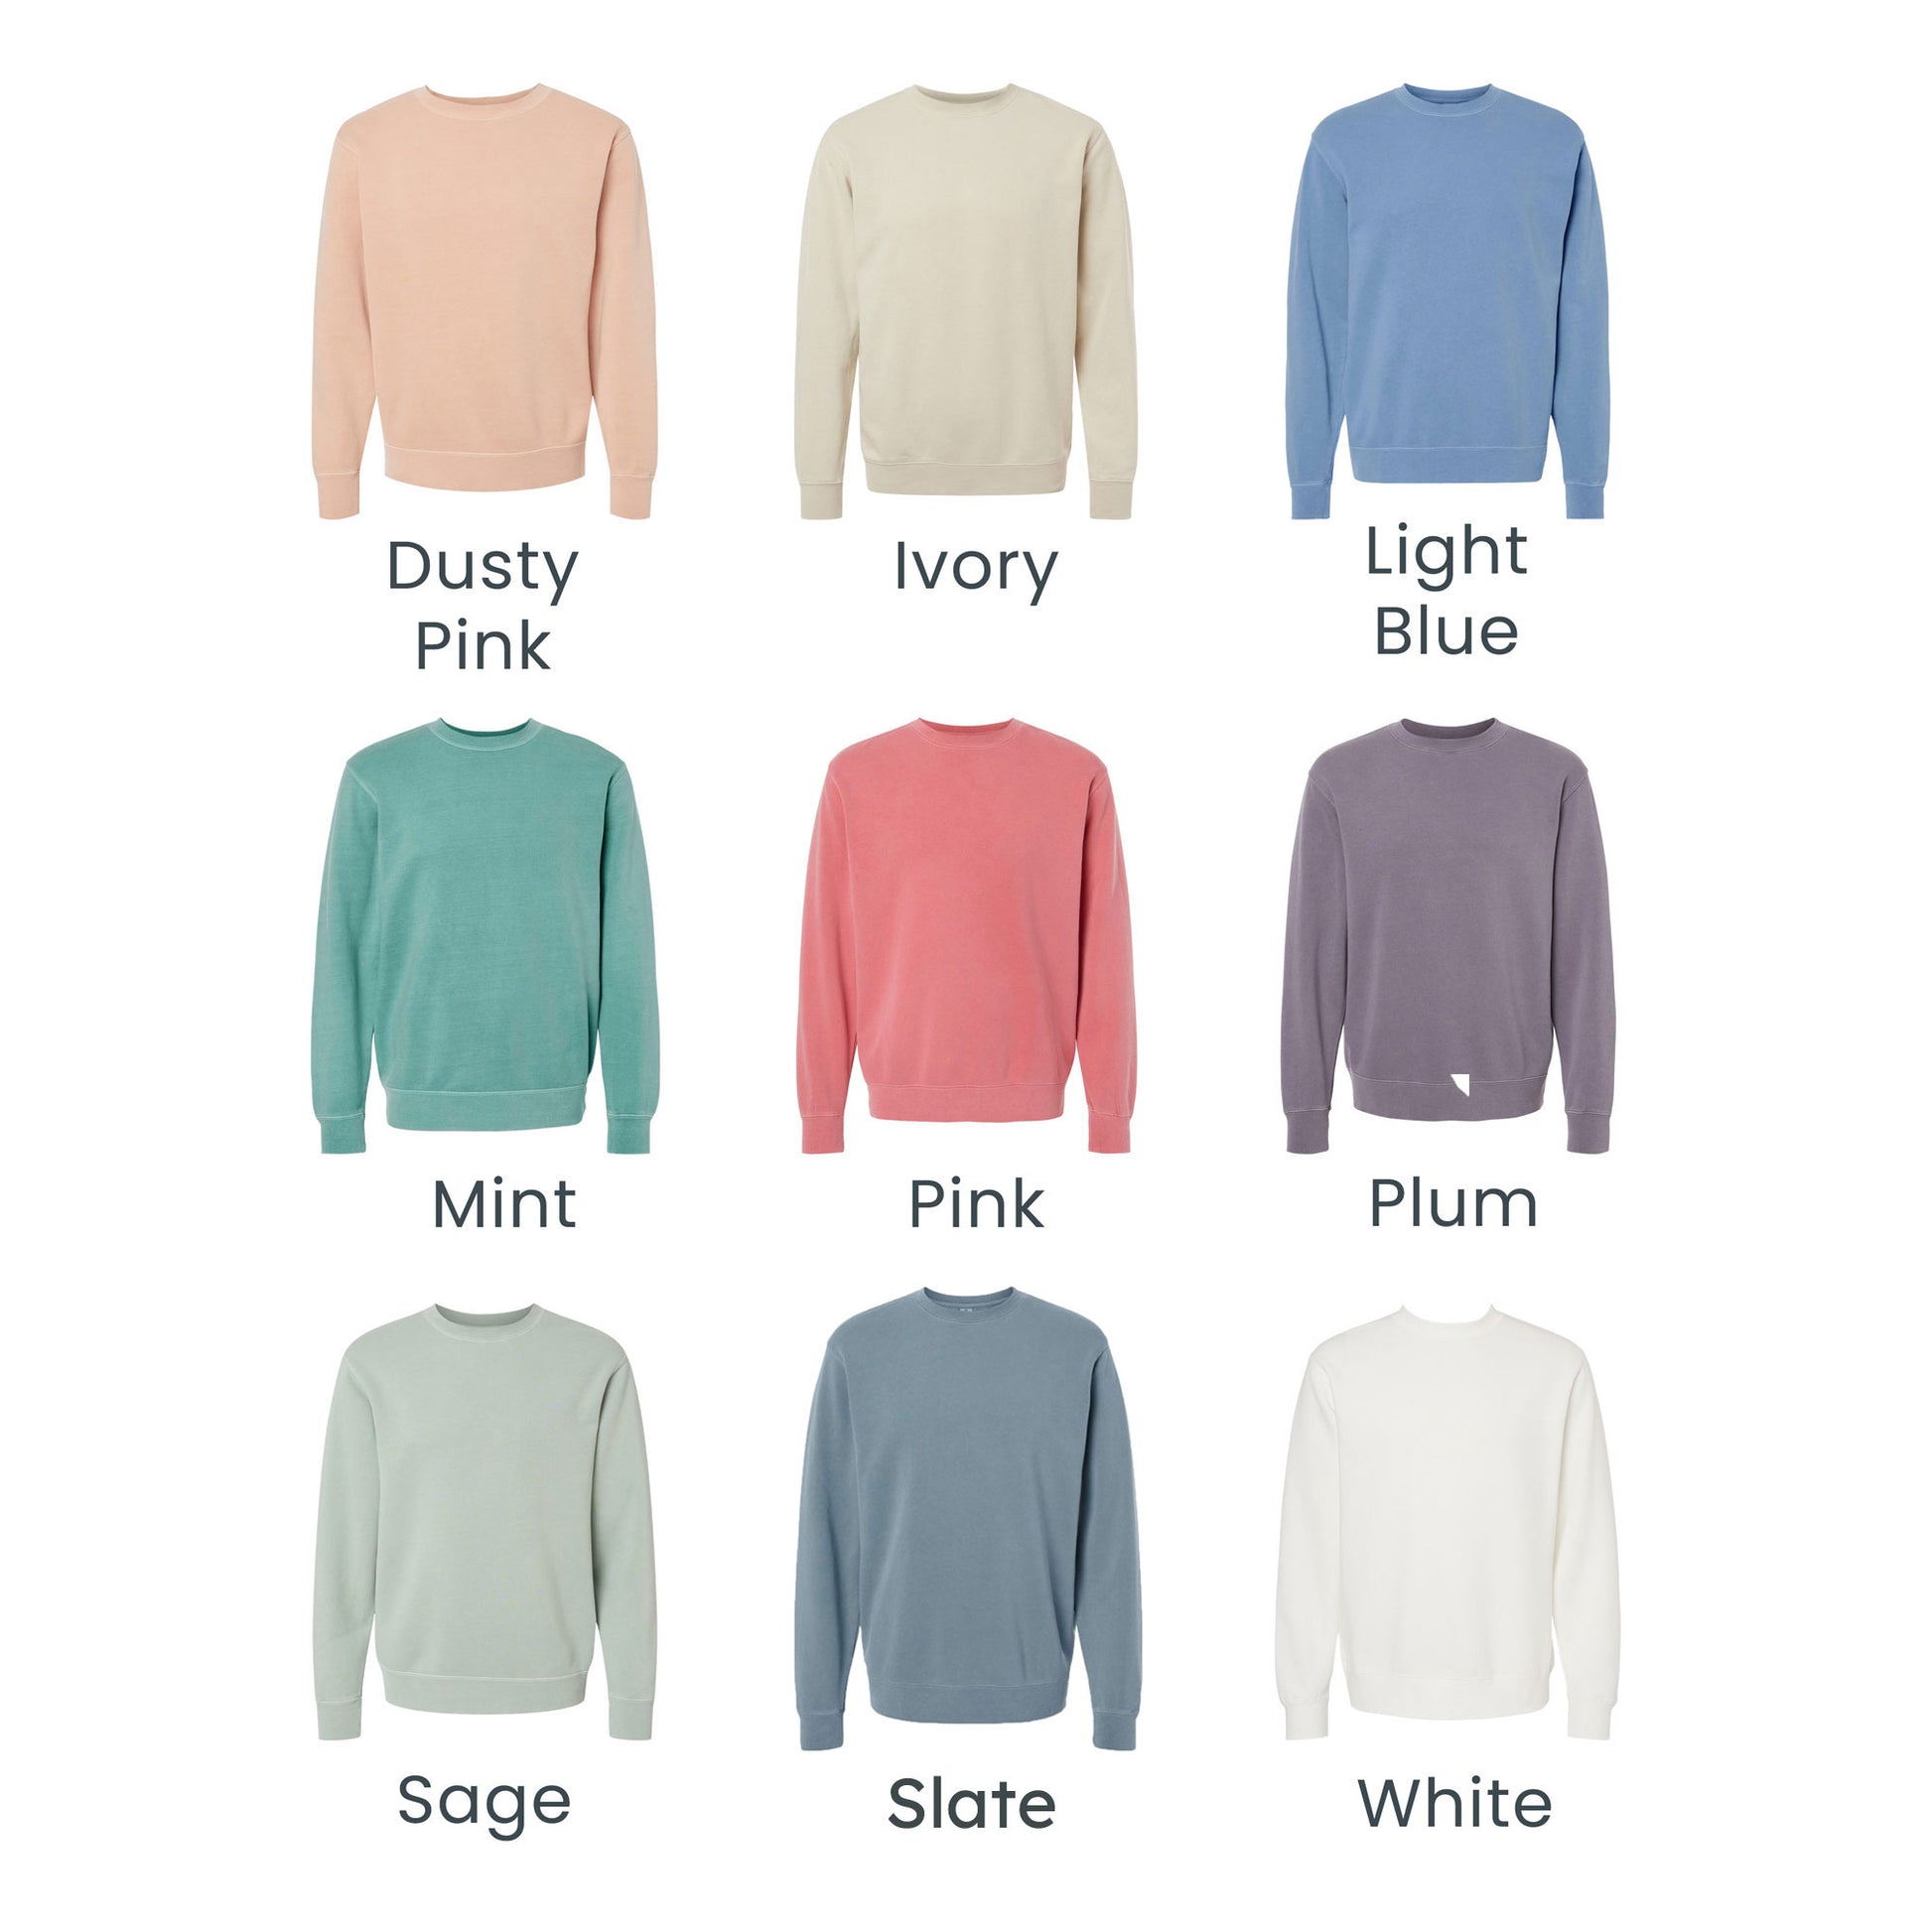 Sweatshirt color sheet